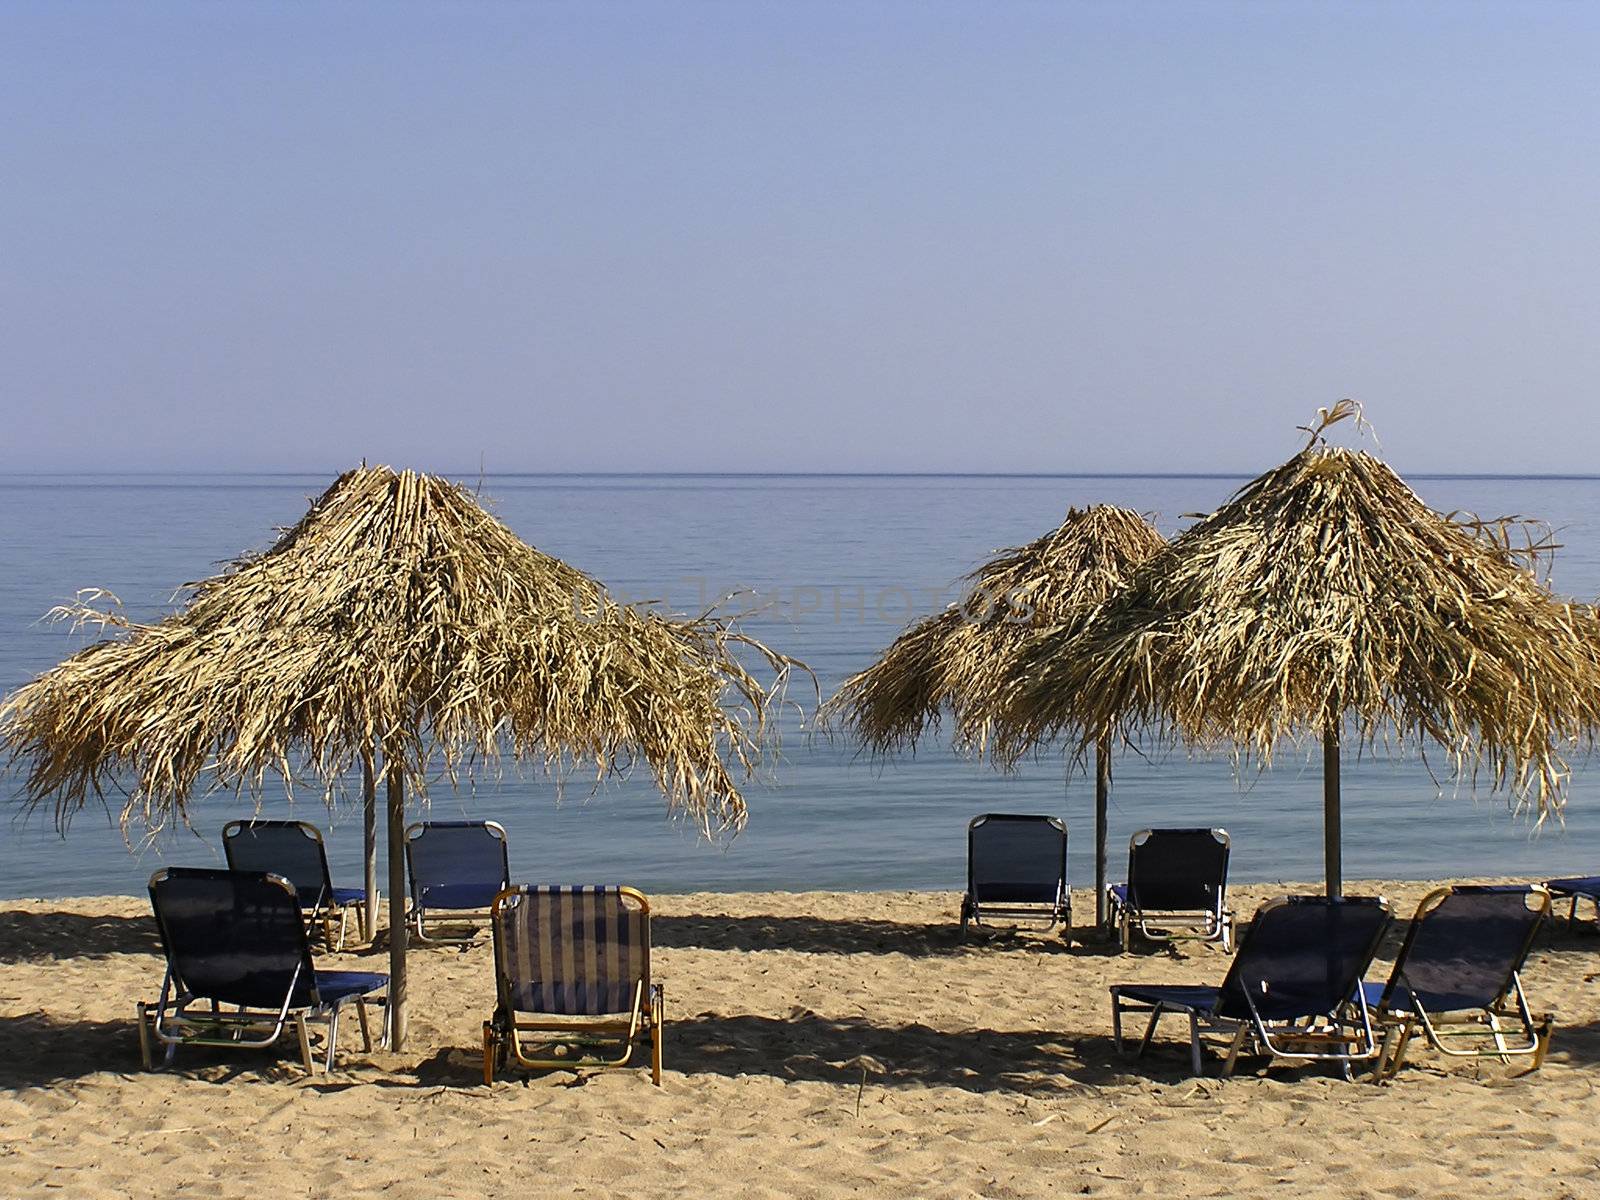 Sunshades and sunbeds at sandy greek beach.